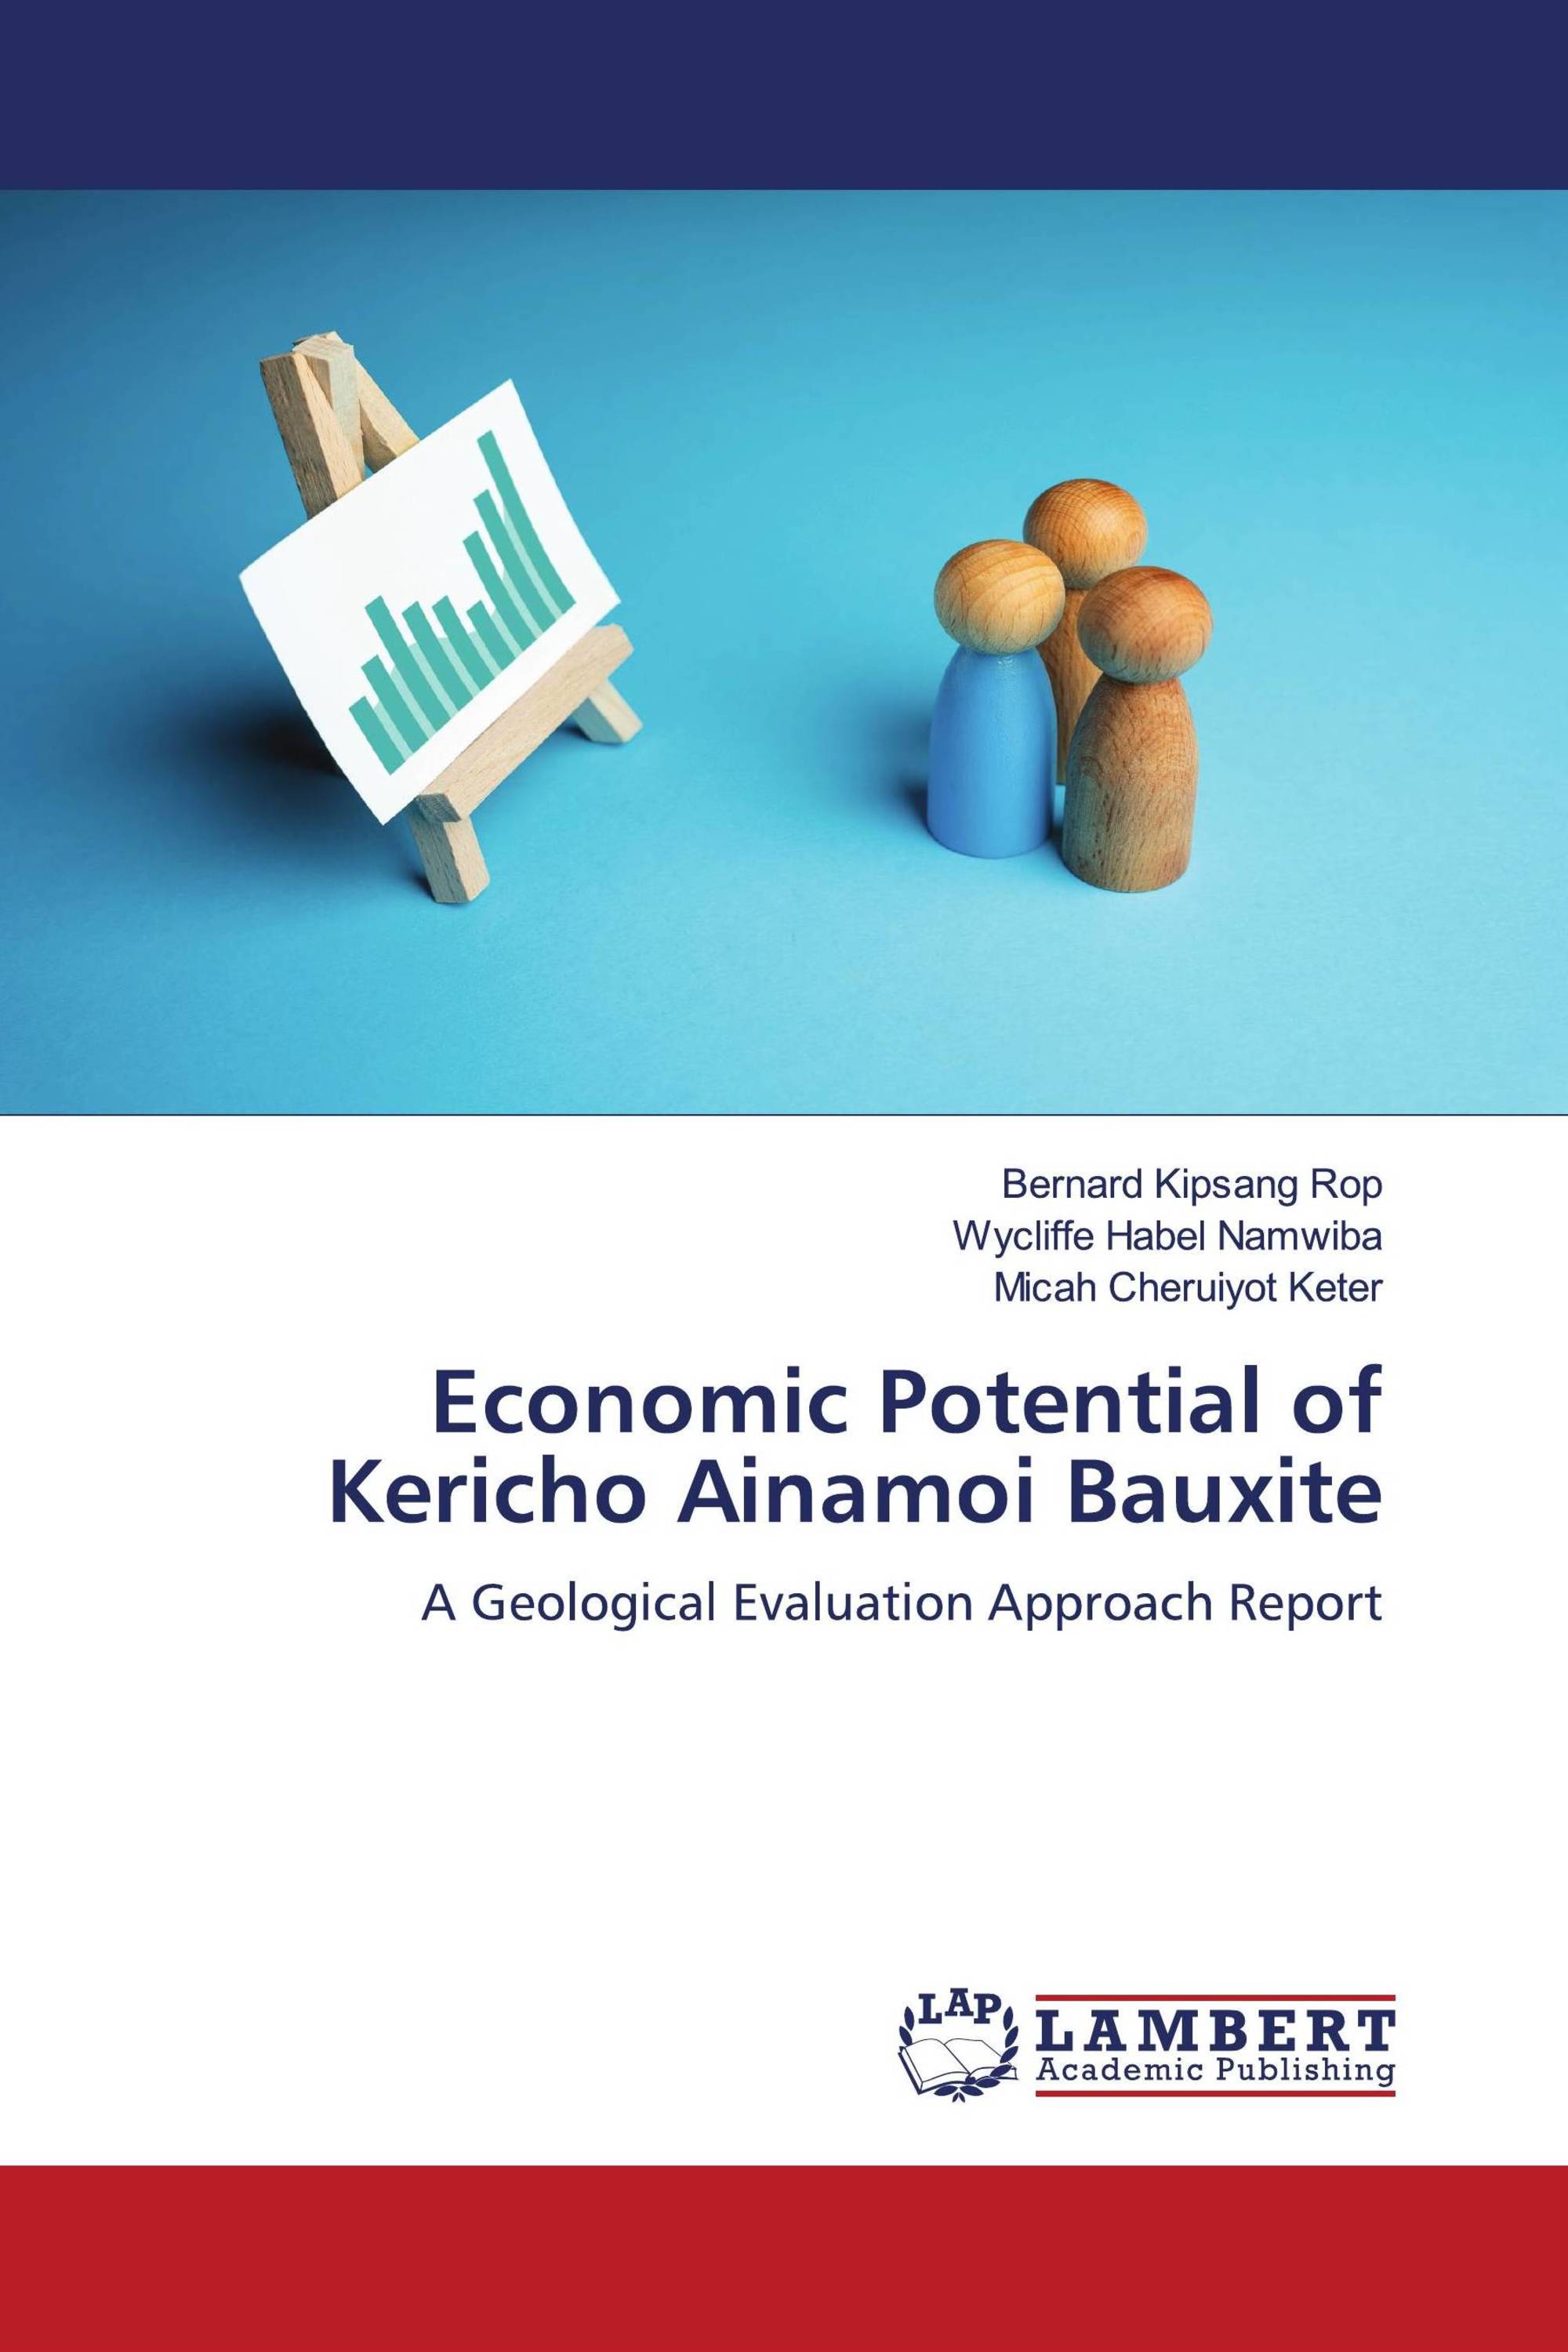 Economic Potential of Kericho Ainamoi Bauxite